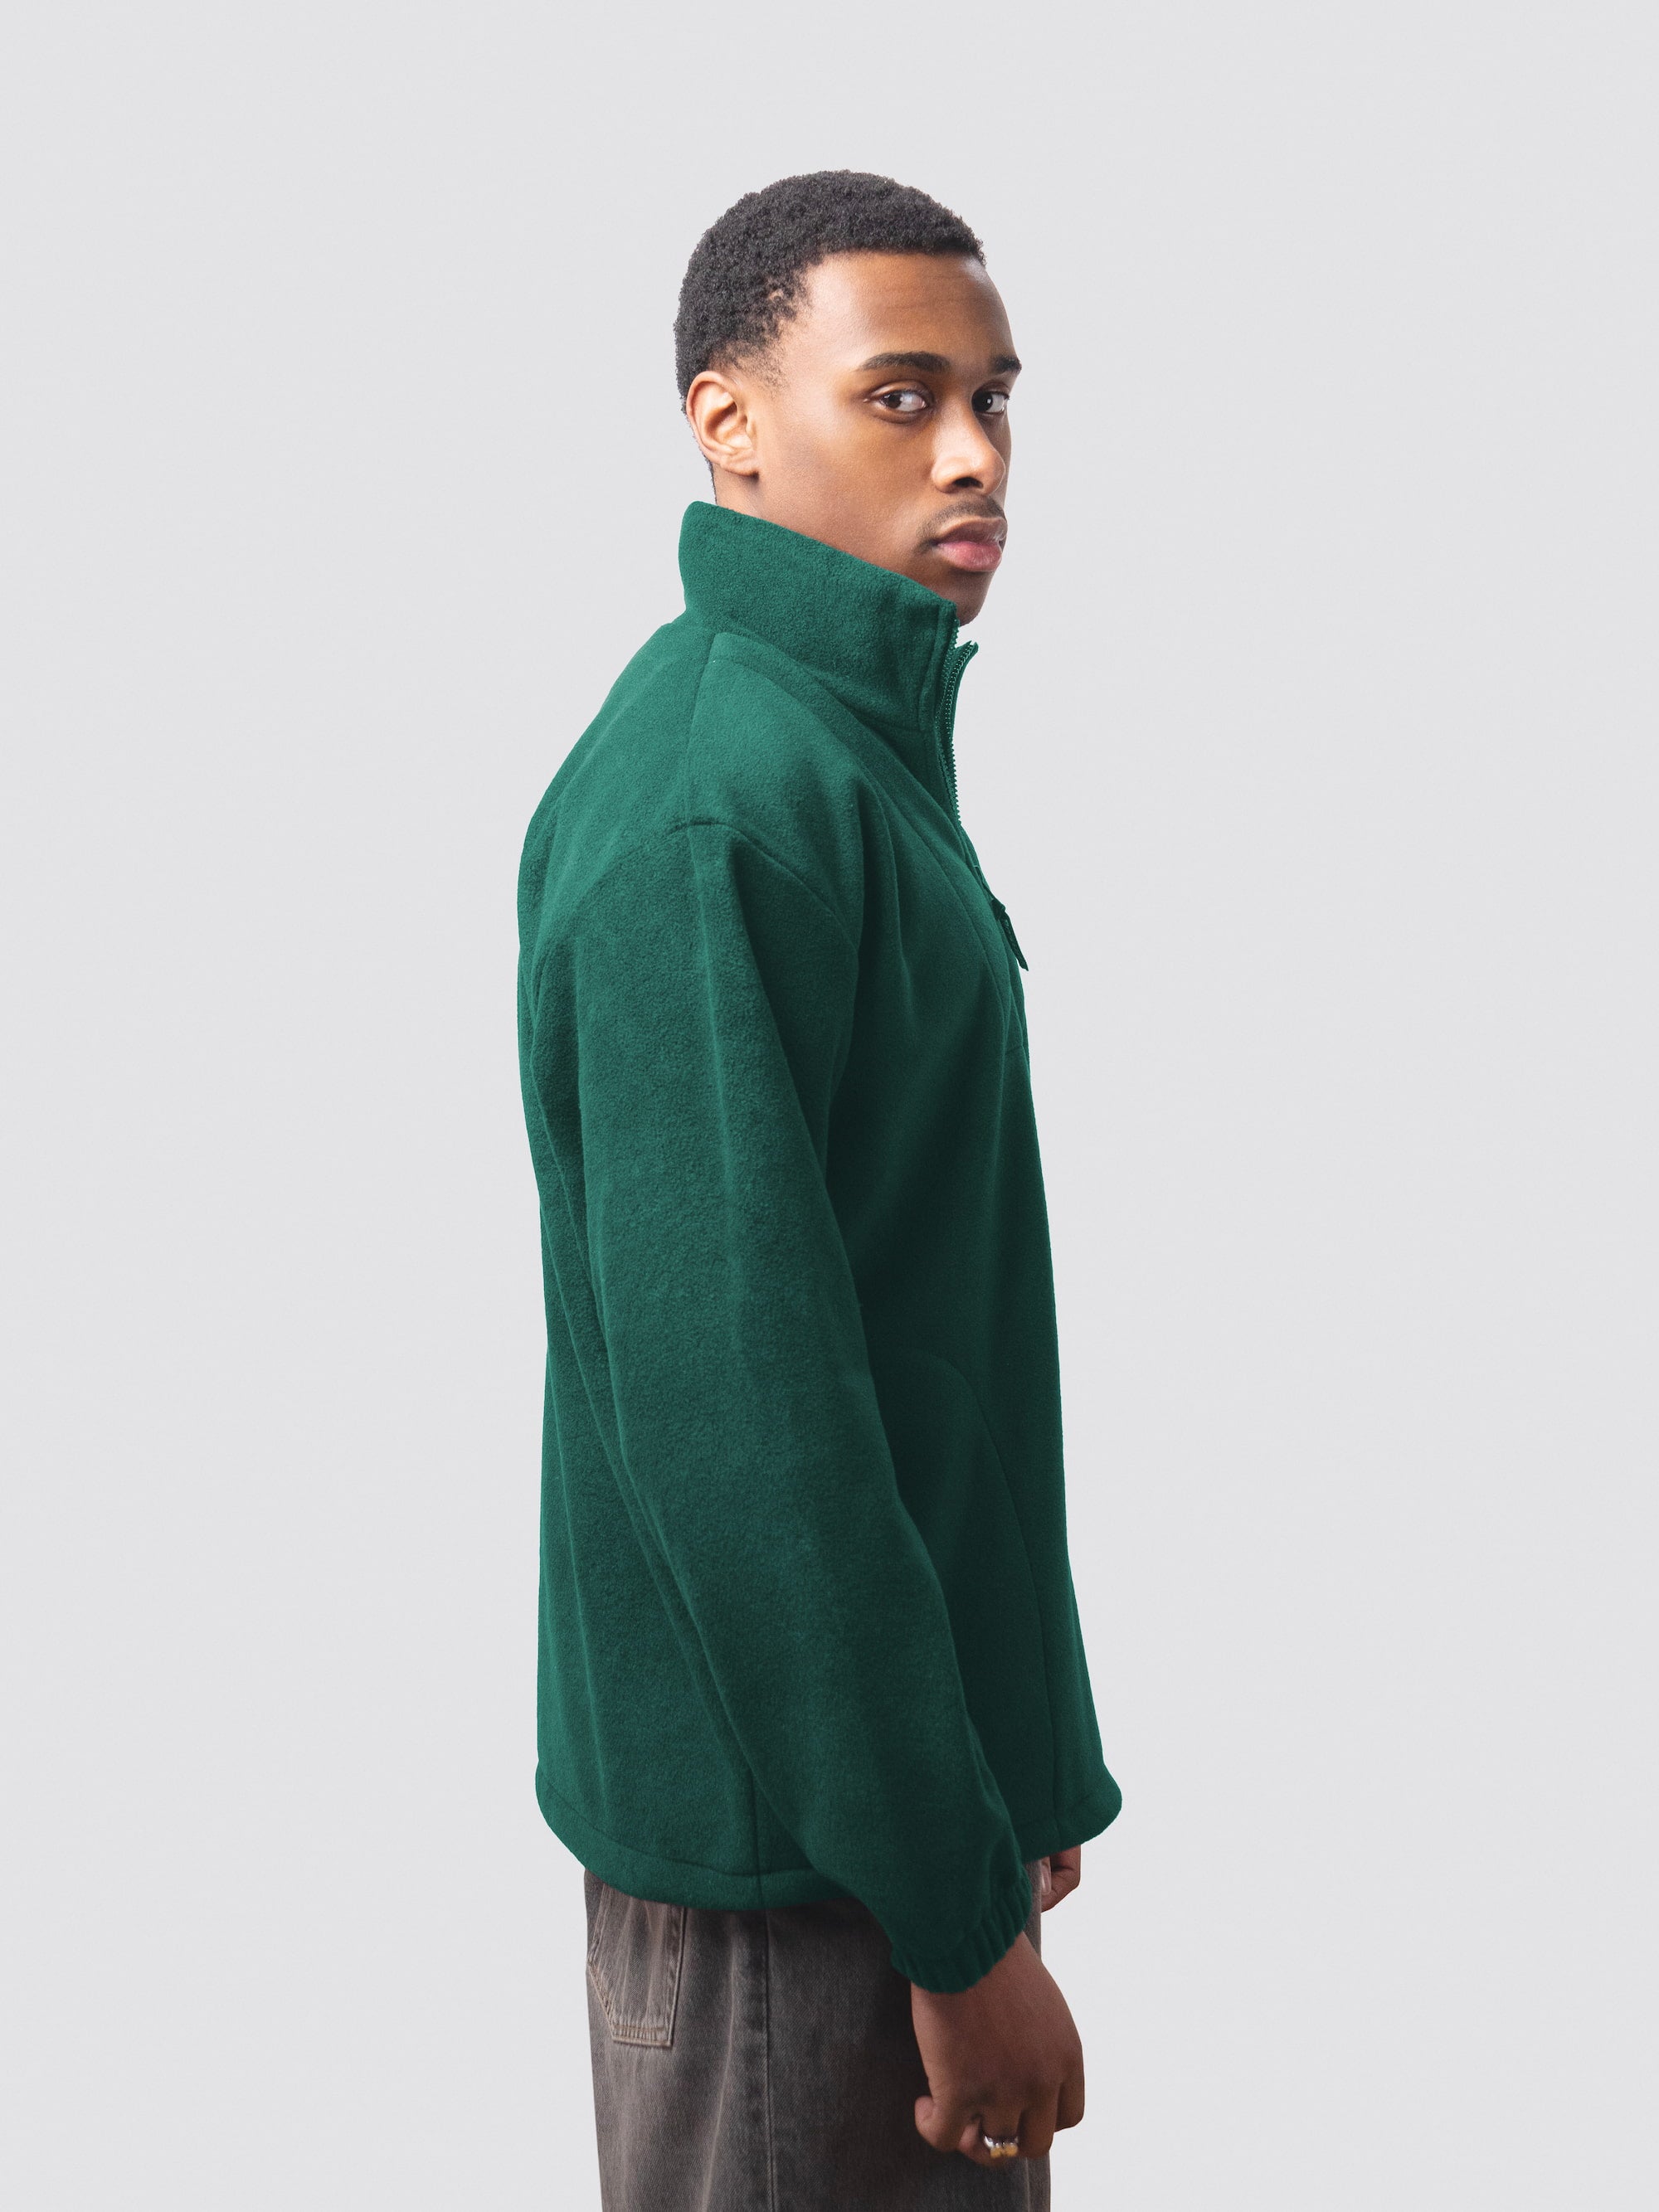 Forest green quarter-zip fleece, with stand-up collar